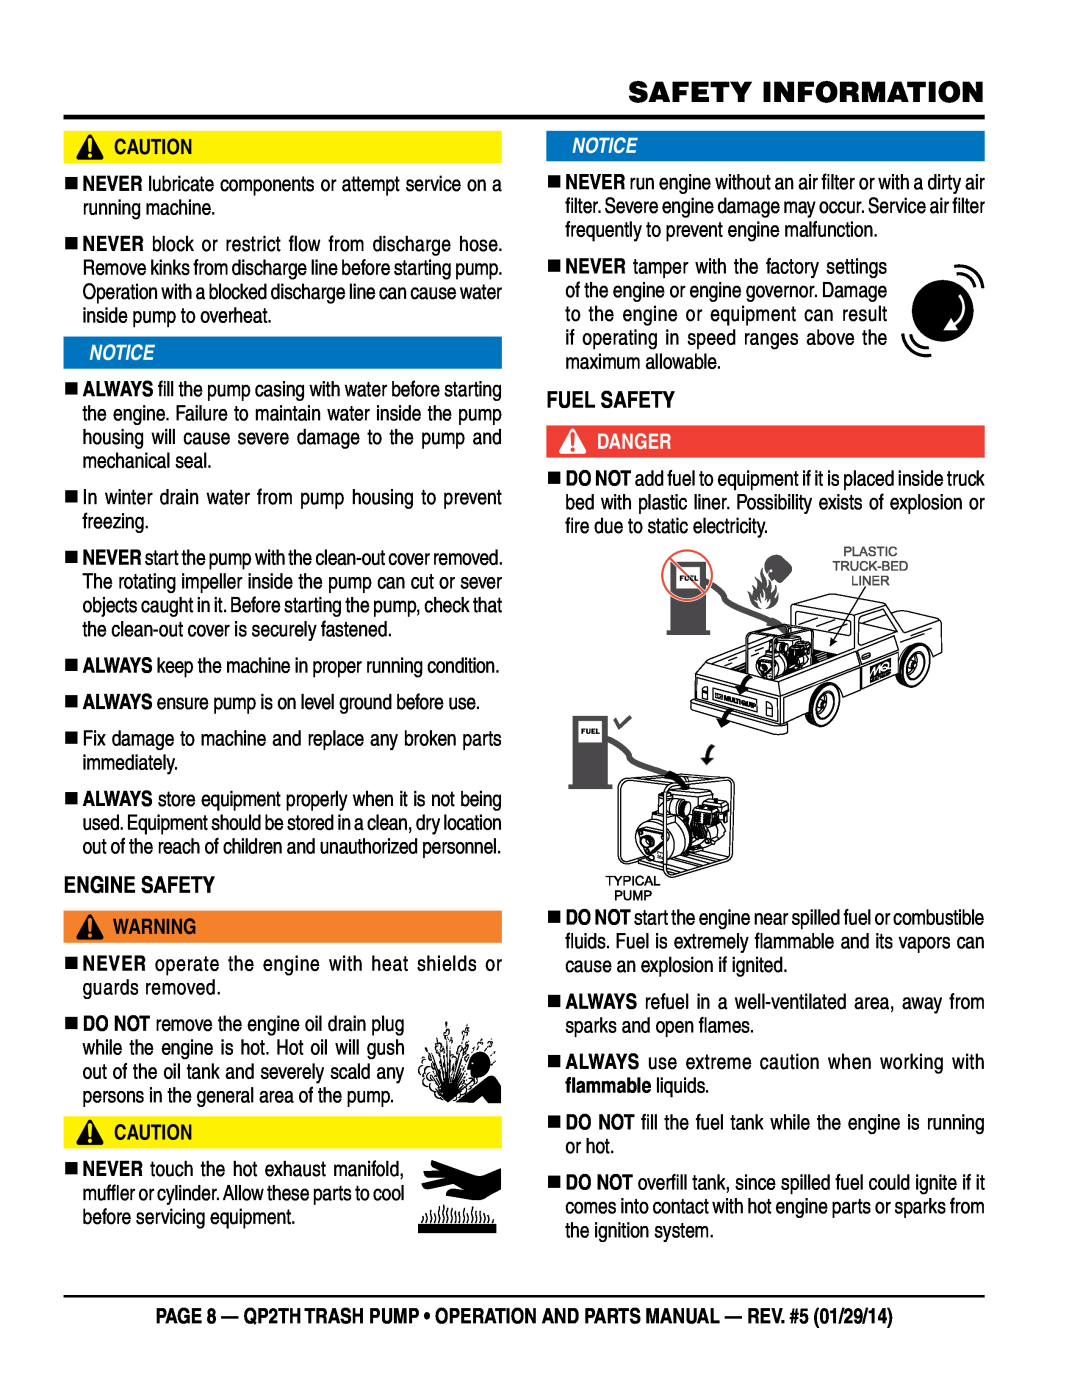 Multiquip QP2TH manual Engine Safety, Fuel Safety, Safety Information, Danger 